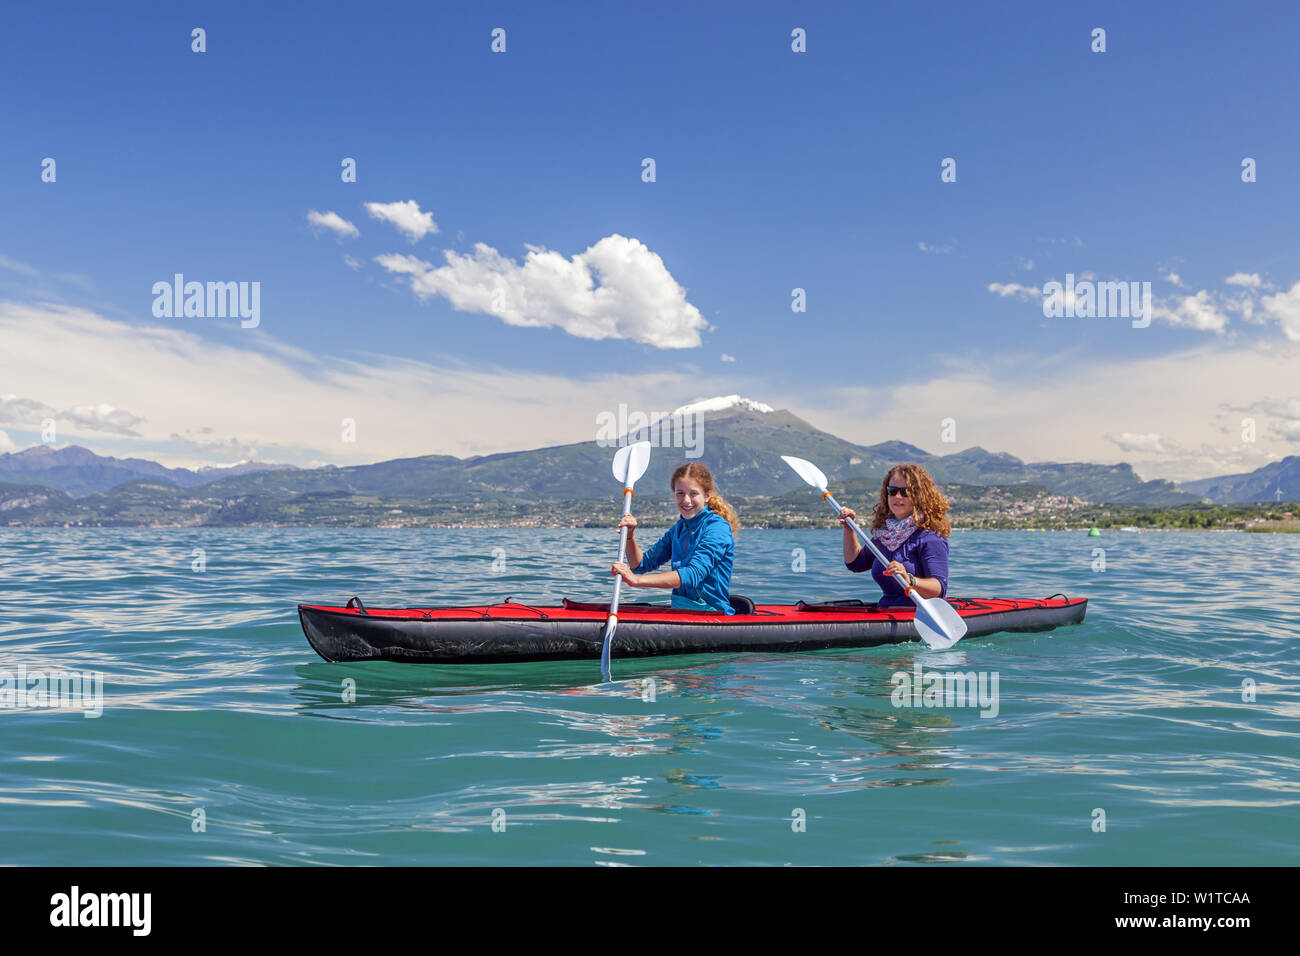 Kajak am Gardasee vor dem Berg Monte Baldo, Lazise, Nördliche Italienische Seen, Venetien, Norditalien, Italien, Südeuropa, Europa Stockfoto